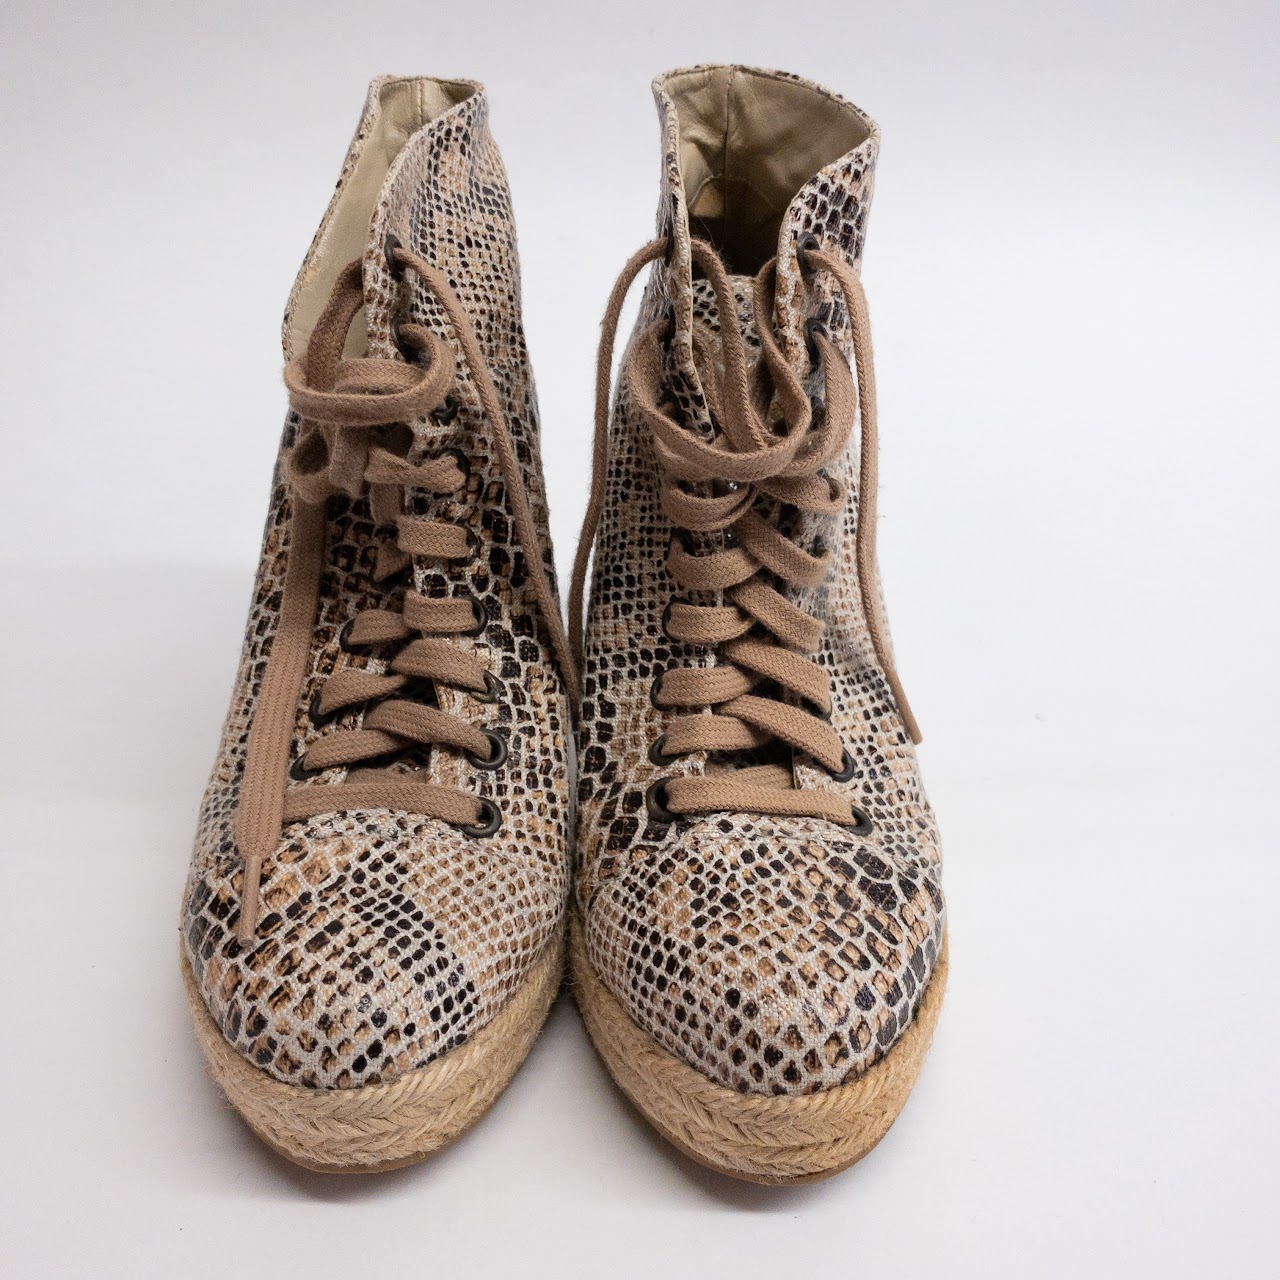 Stella McCartney Wedge Espadrille Ankle Boots